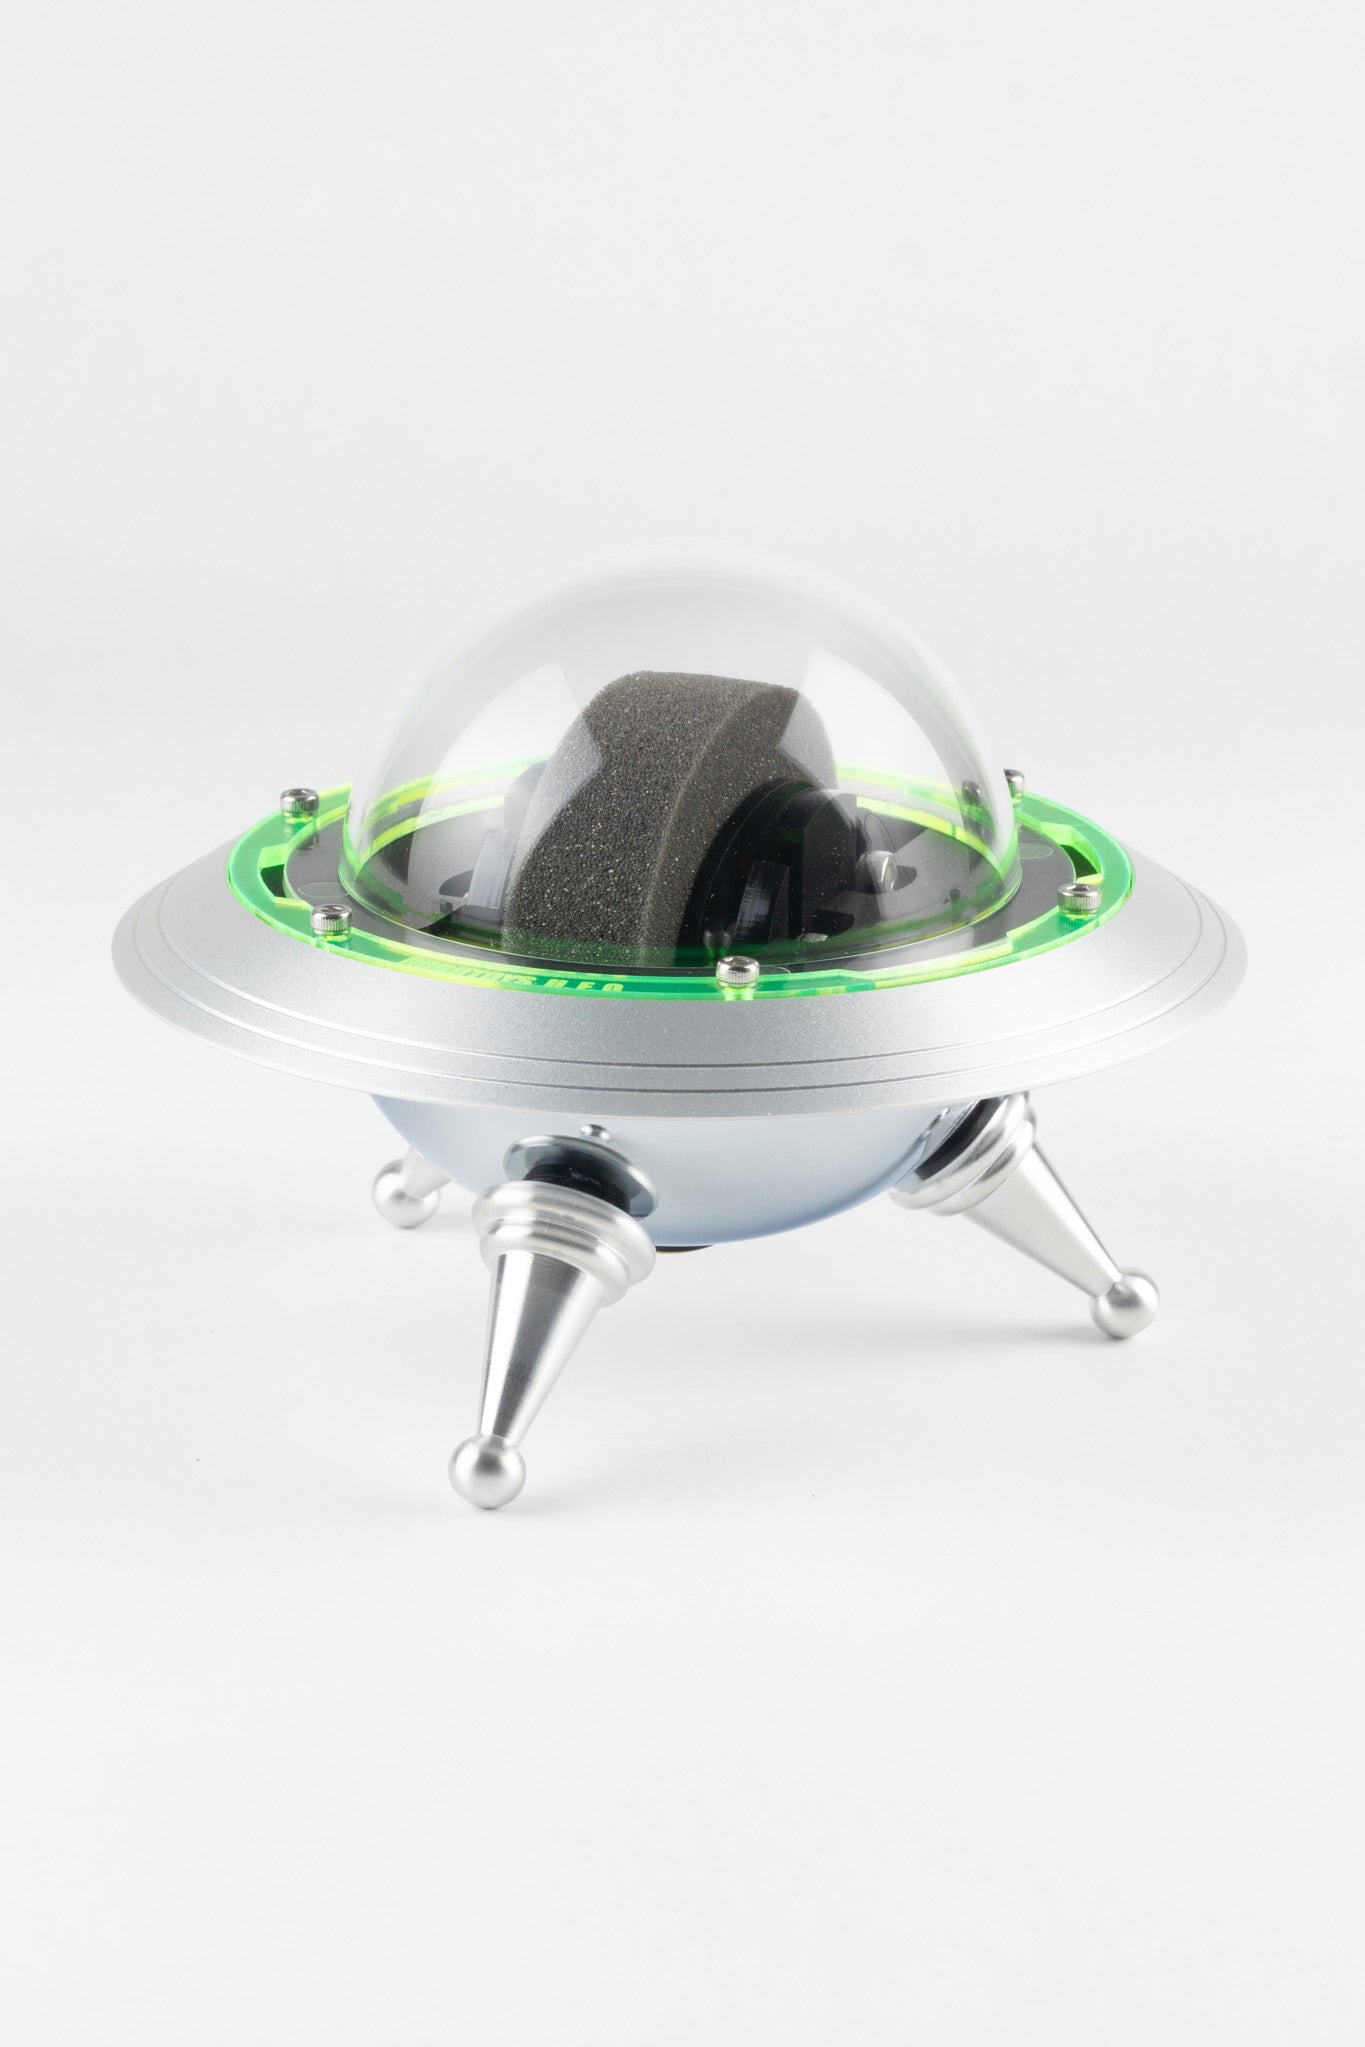 ROBOTOYS - 'ELLIOT' ROBOT UFO - Watch holder